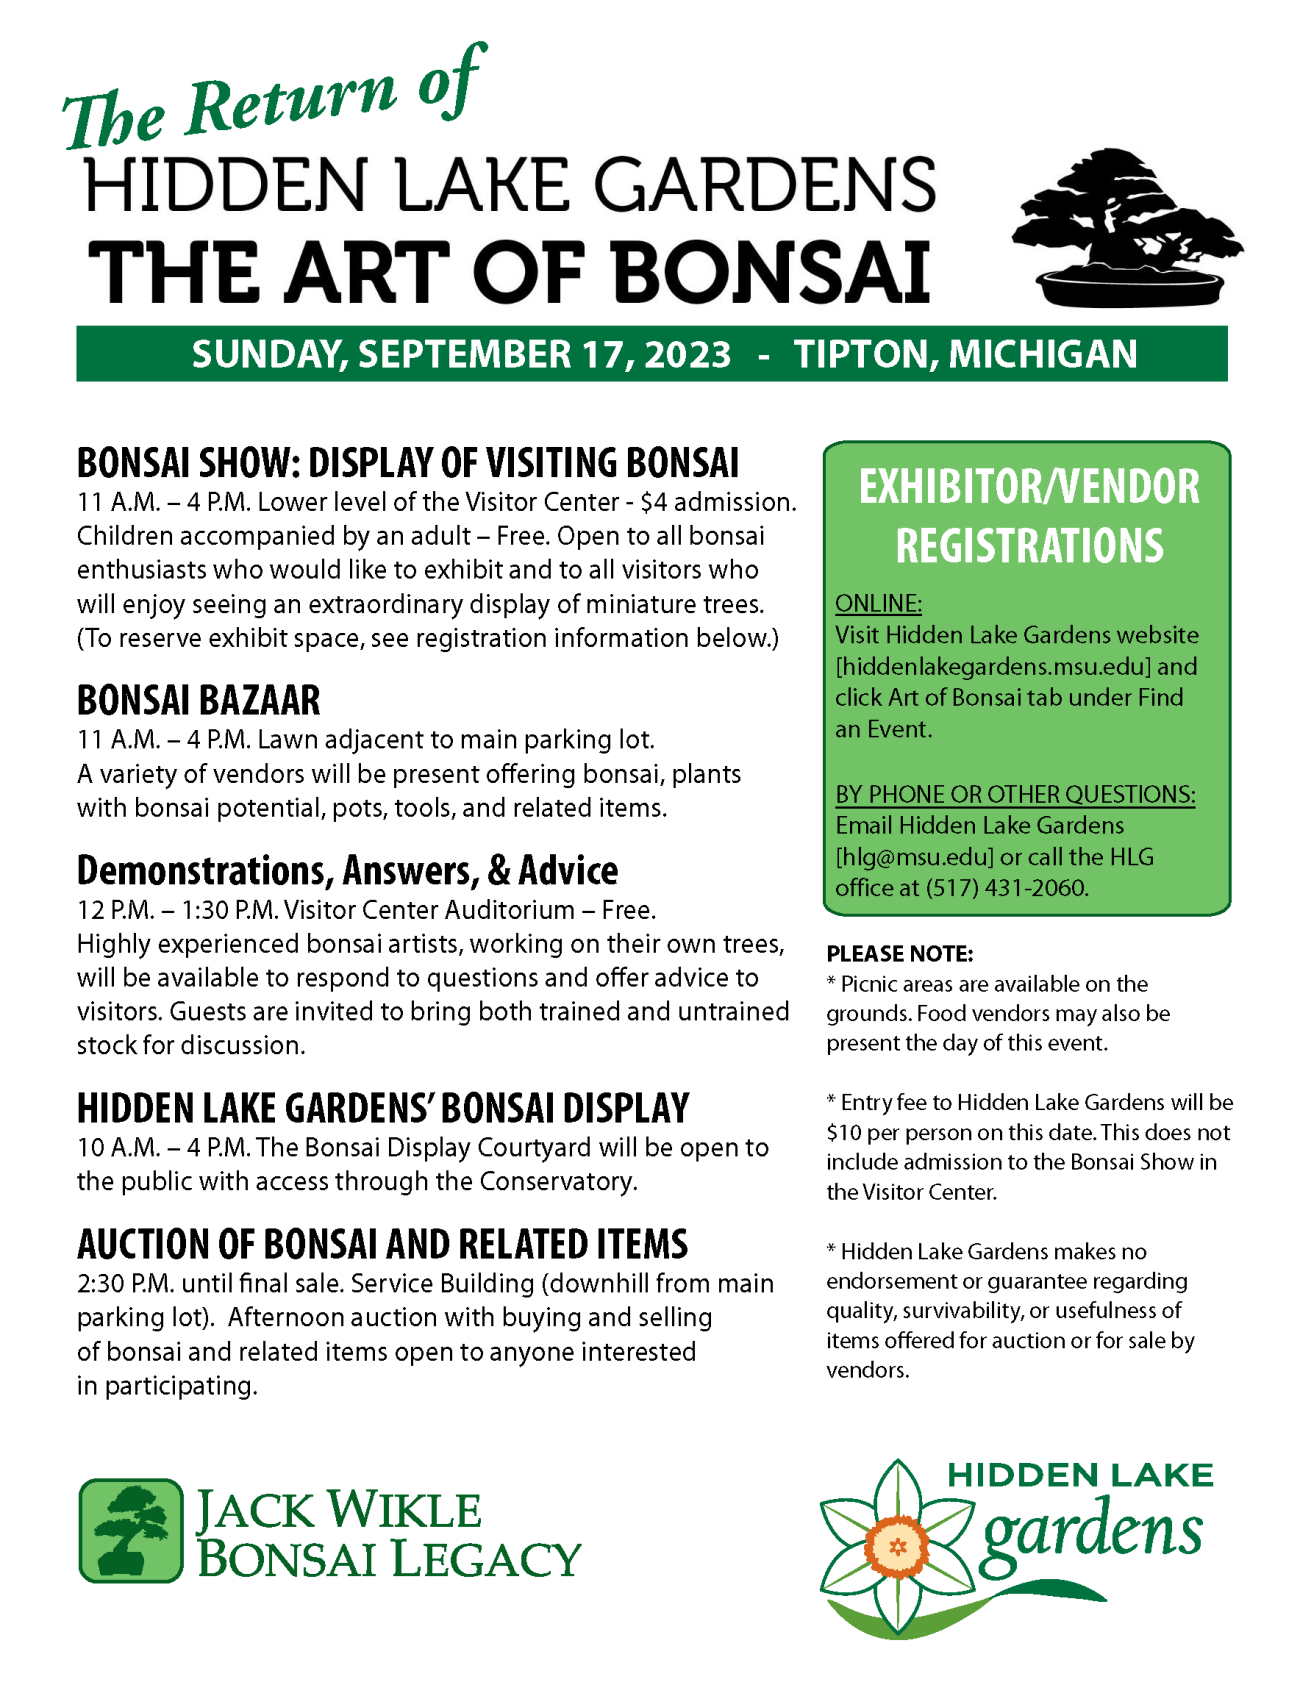 The Return of Hidden Lake Gardens The Art of Bonsai Flyer